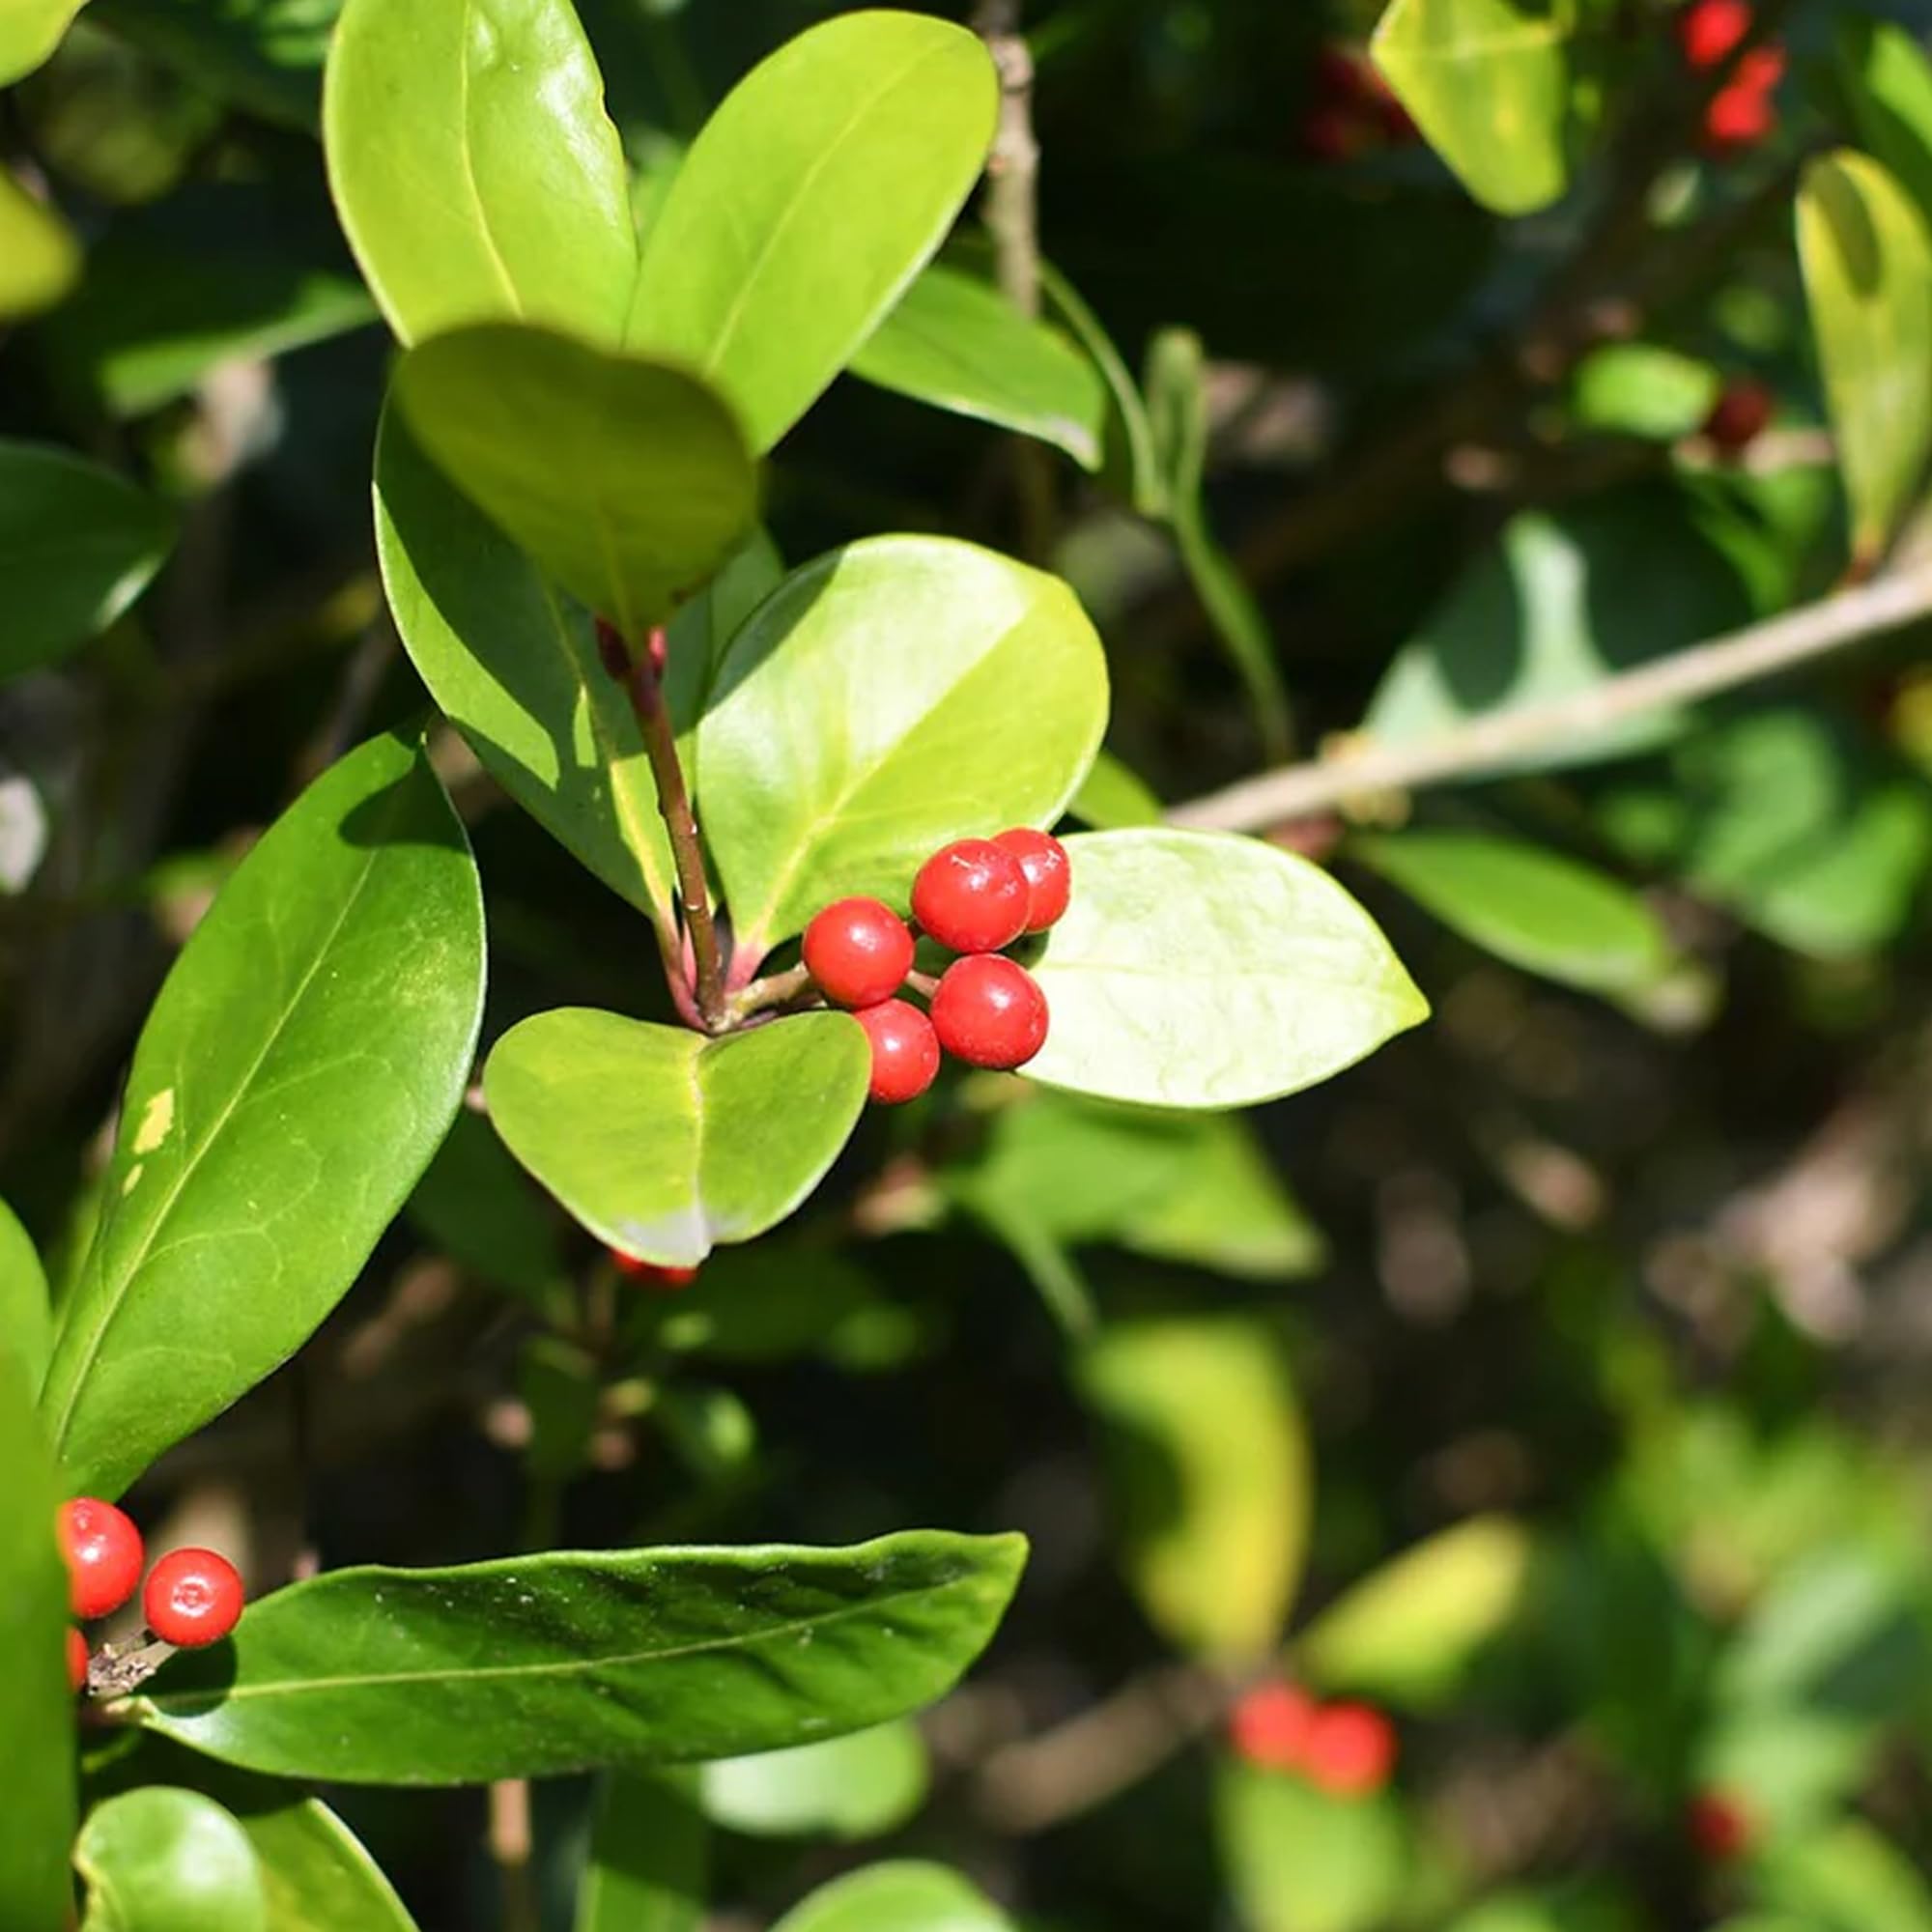 Jovvily Uva Ursi Leaves - 8oz - Dried Whole Leaves - Bearberry Leaves - Herbal Tea